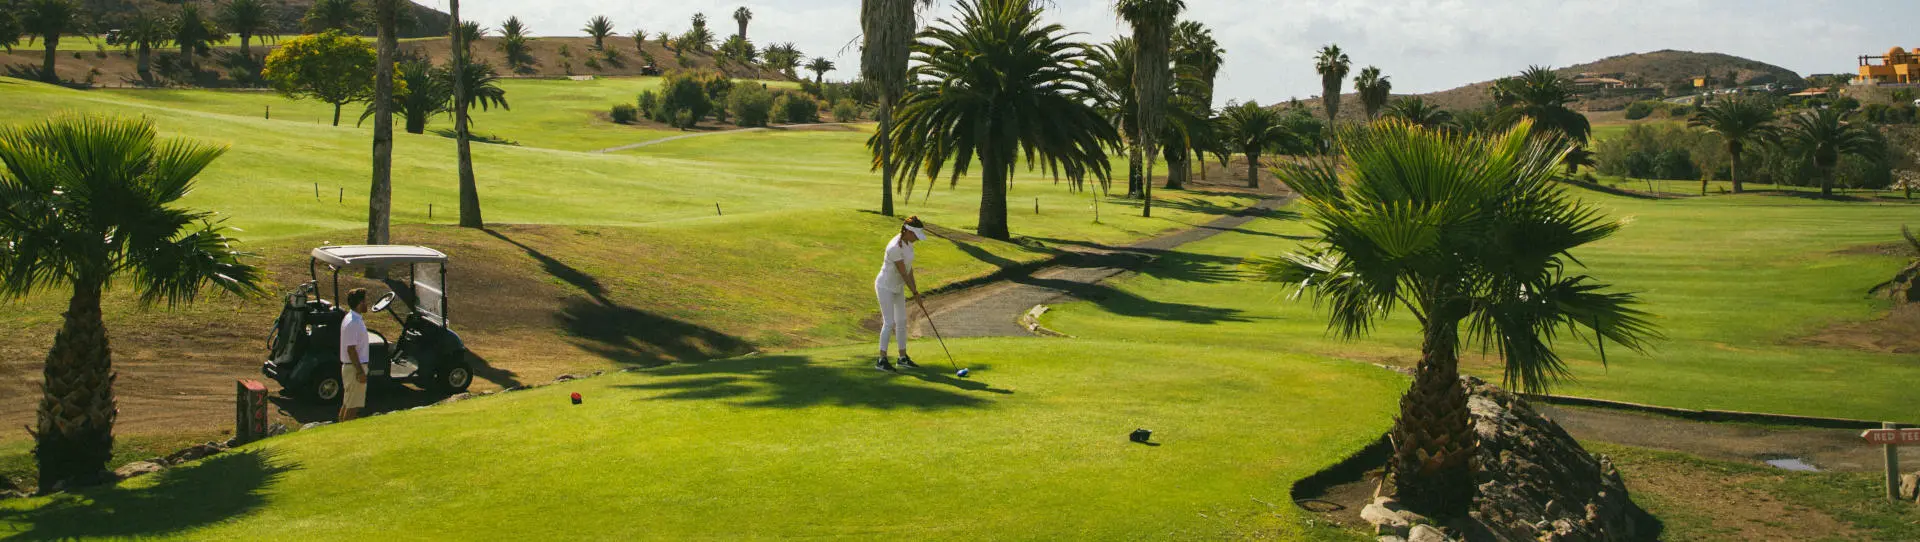 Spain golf courses - Salobre Golf Old Course - Photo 1